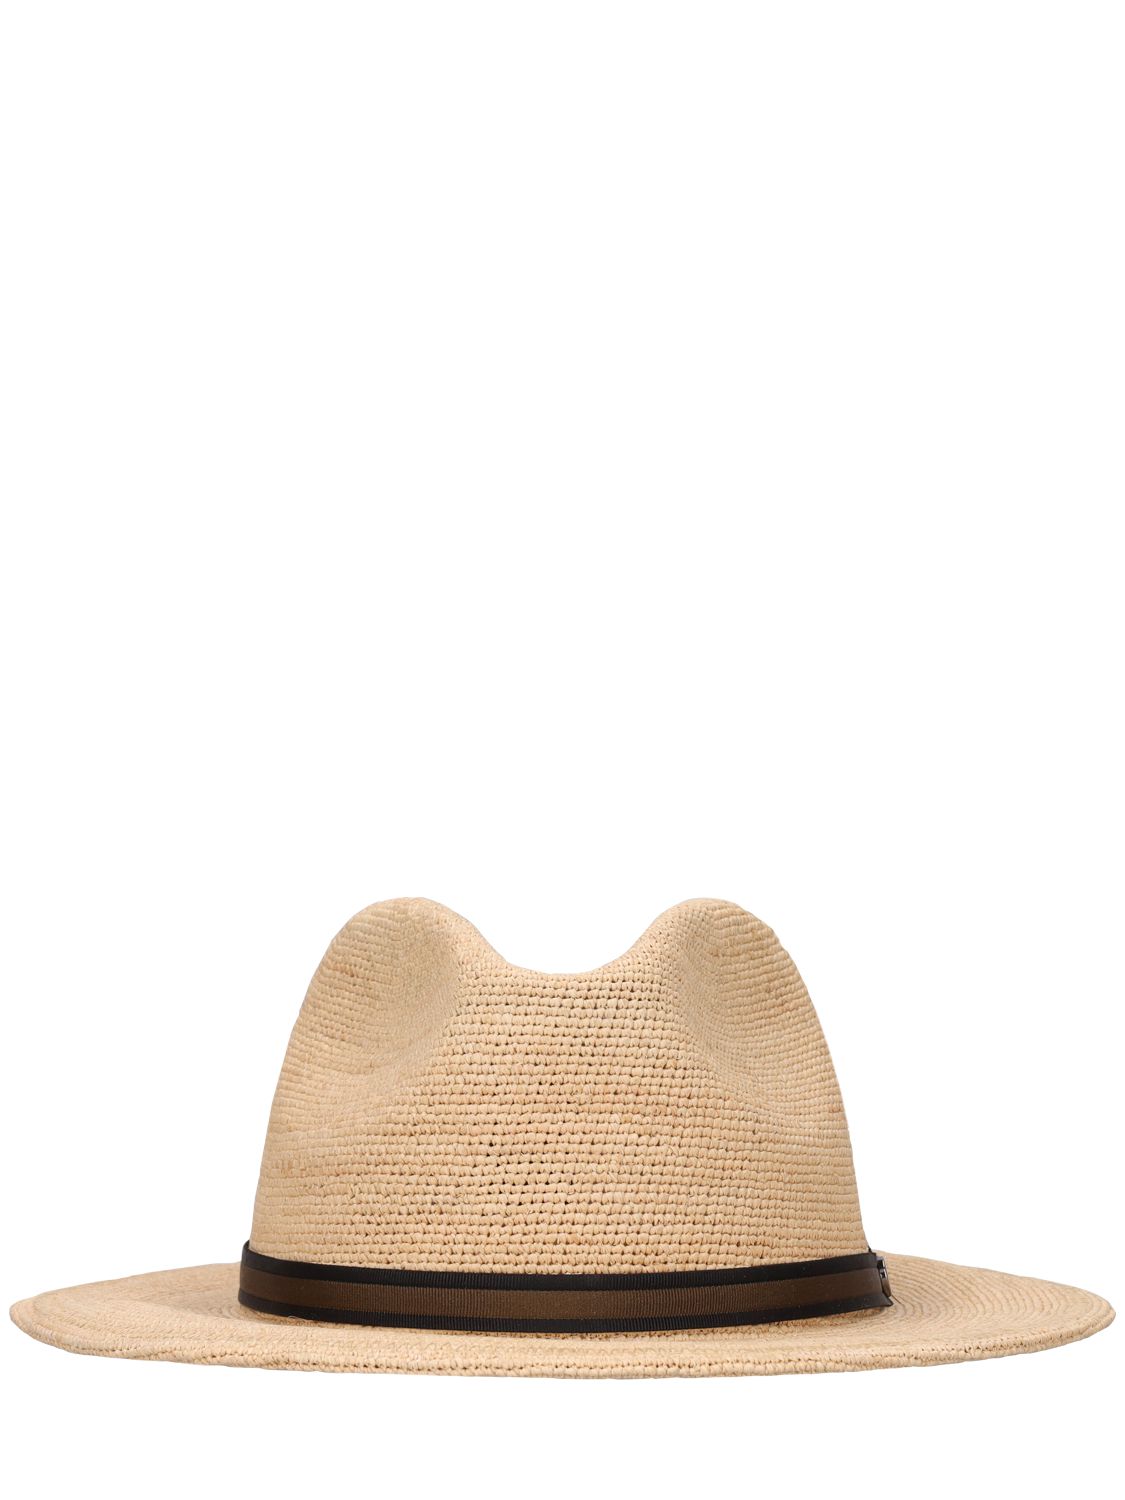 Image of Argentina 6cm Brim Straw Panama Hat